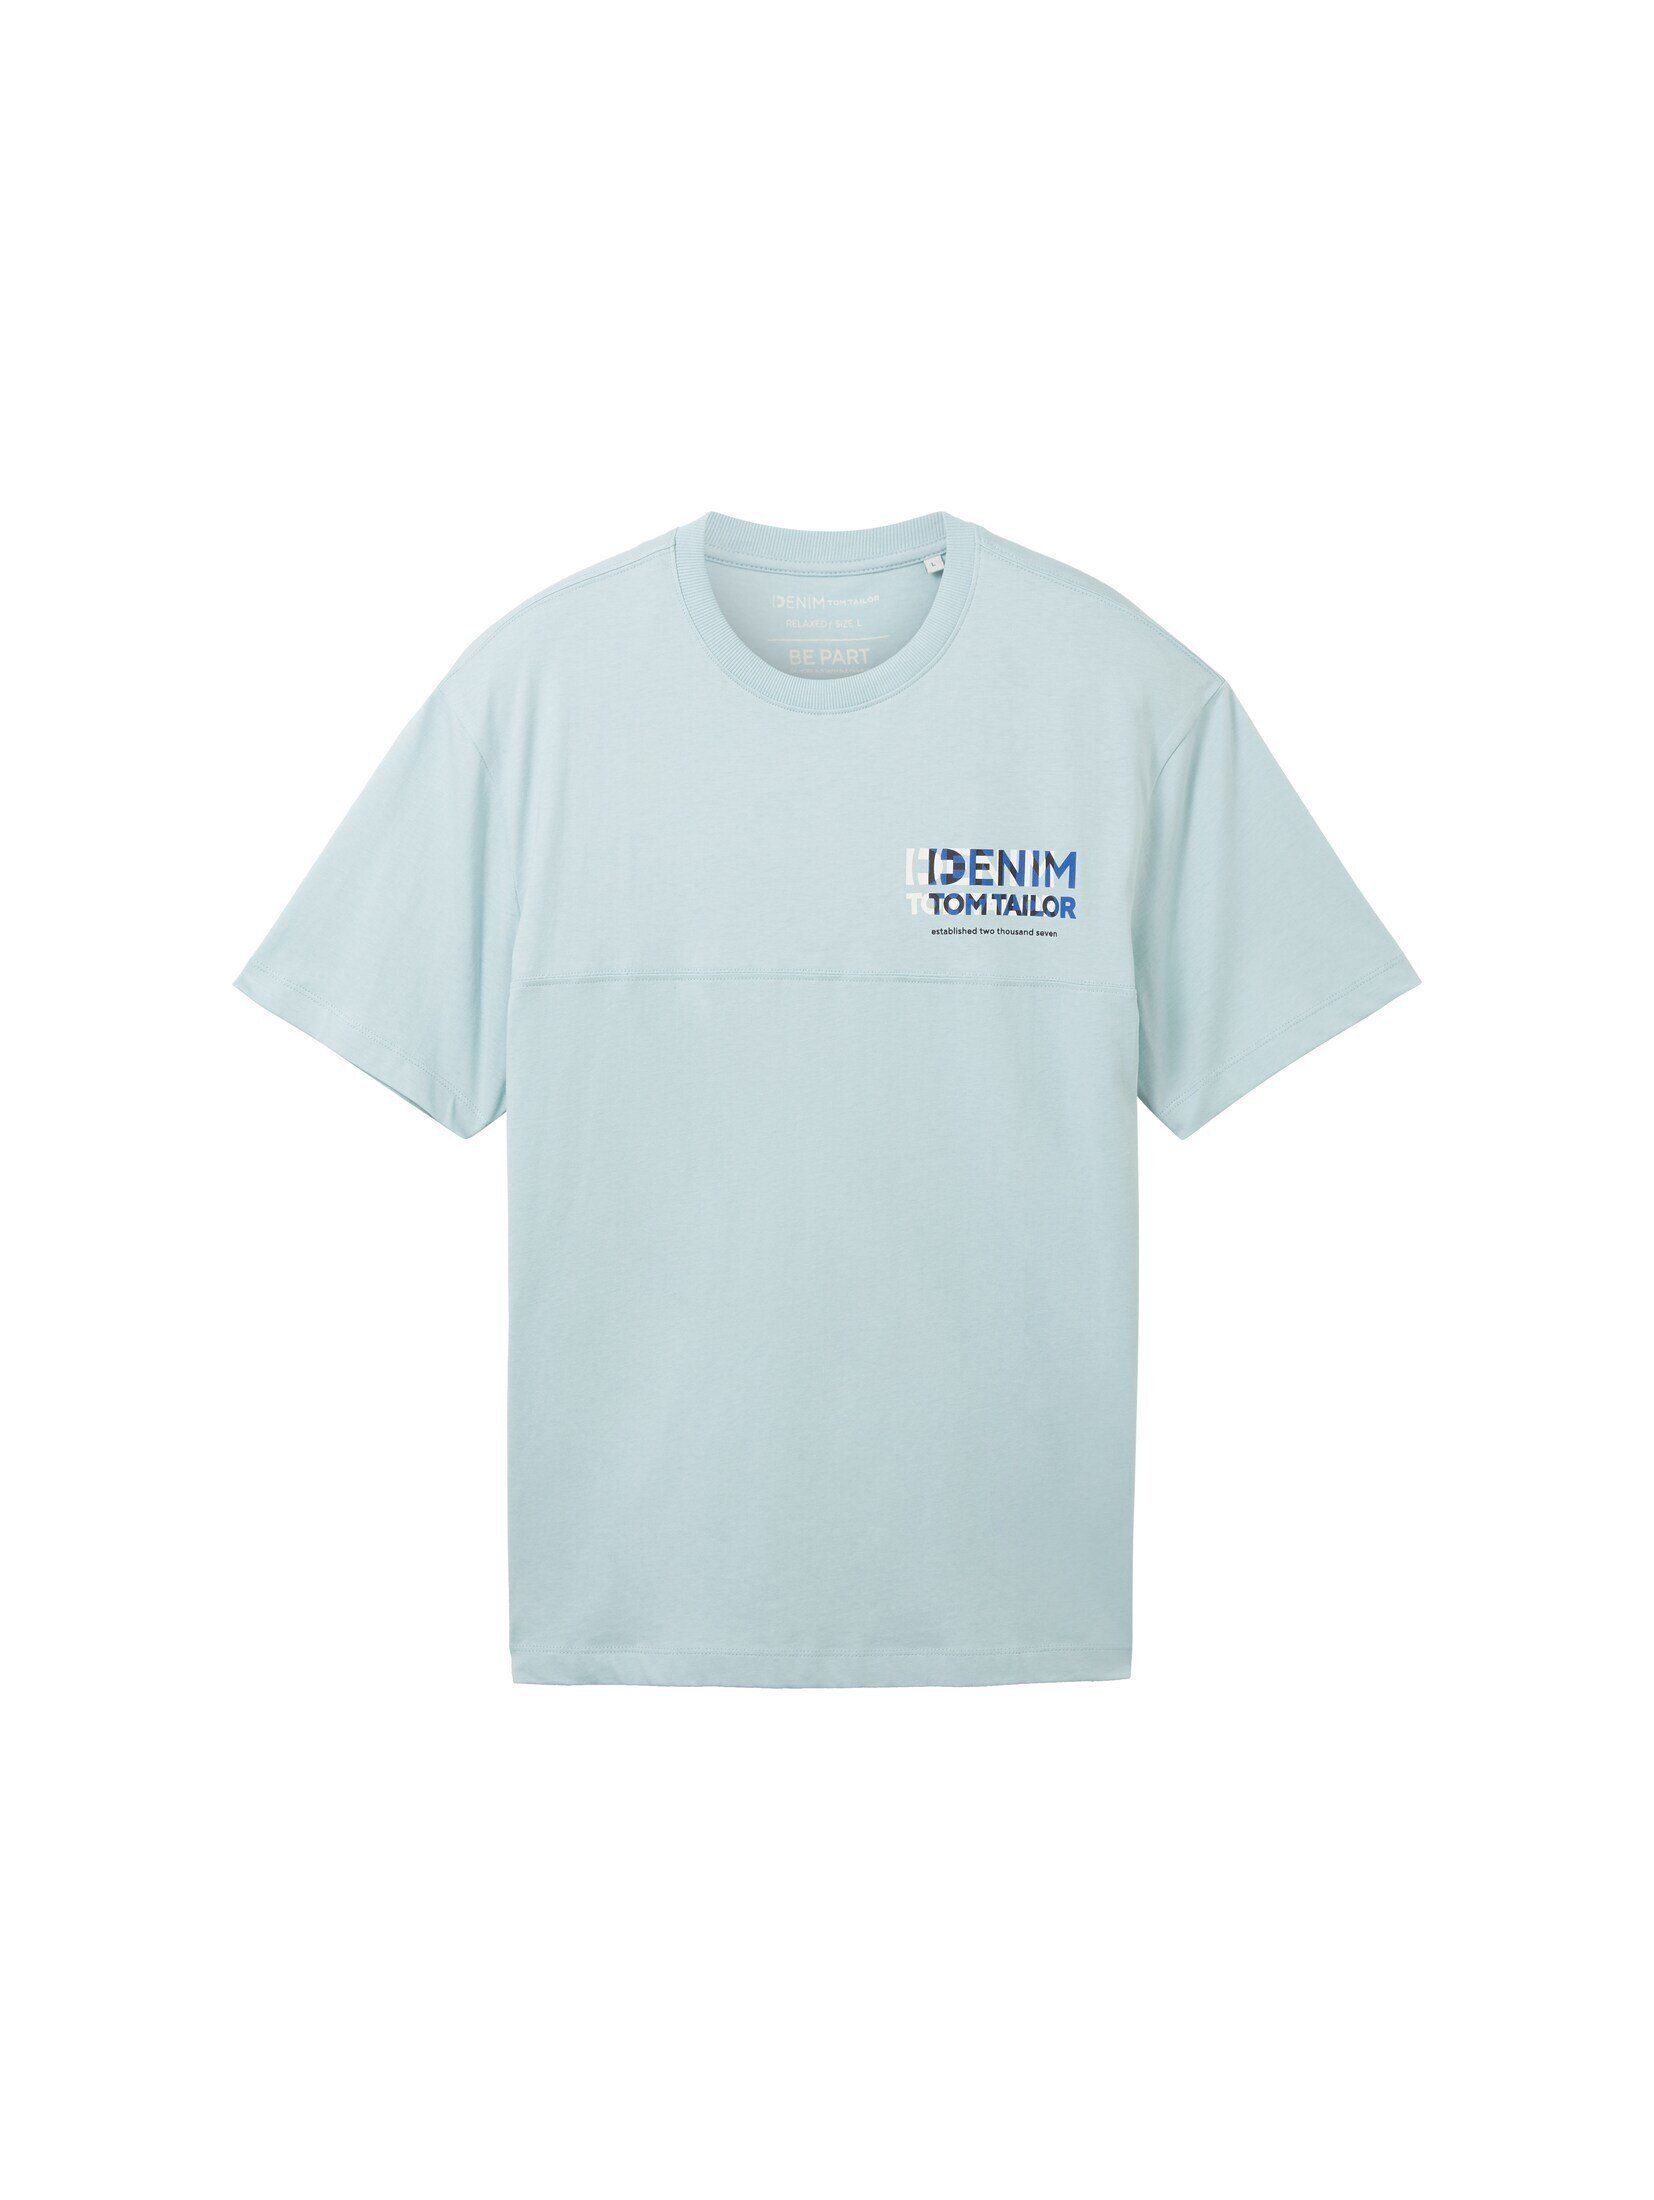 TOM TAILOR Denim T-Shirt T-Shirt dusty mint Bio-Baumwolle blue mit